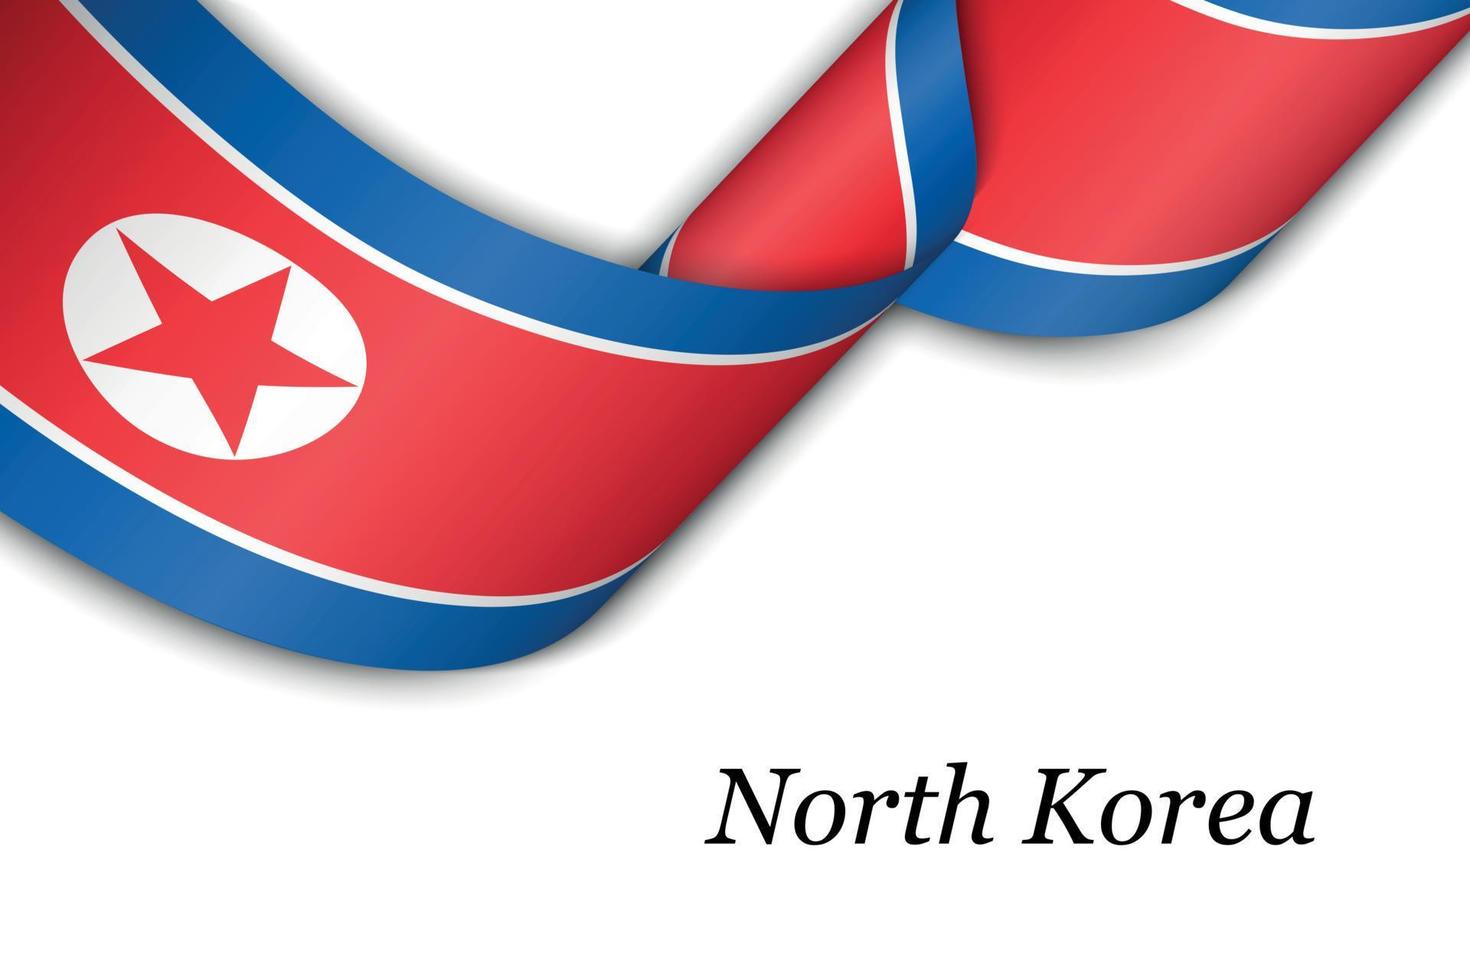 acenando a fita ou banner com bandeira da coreia do norte vetor